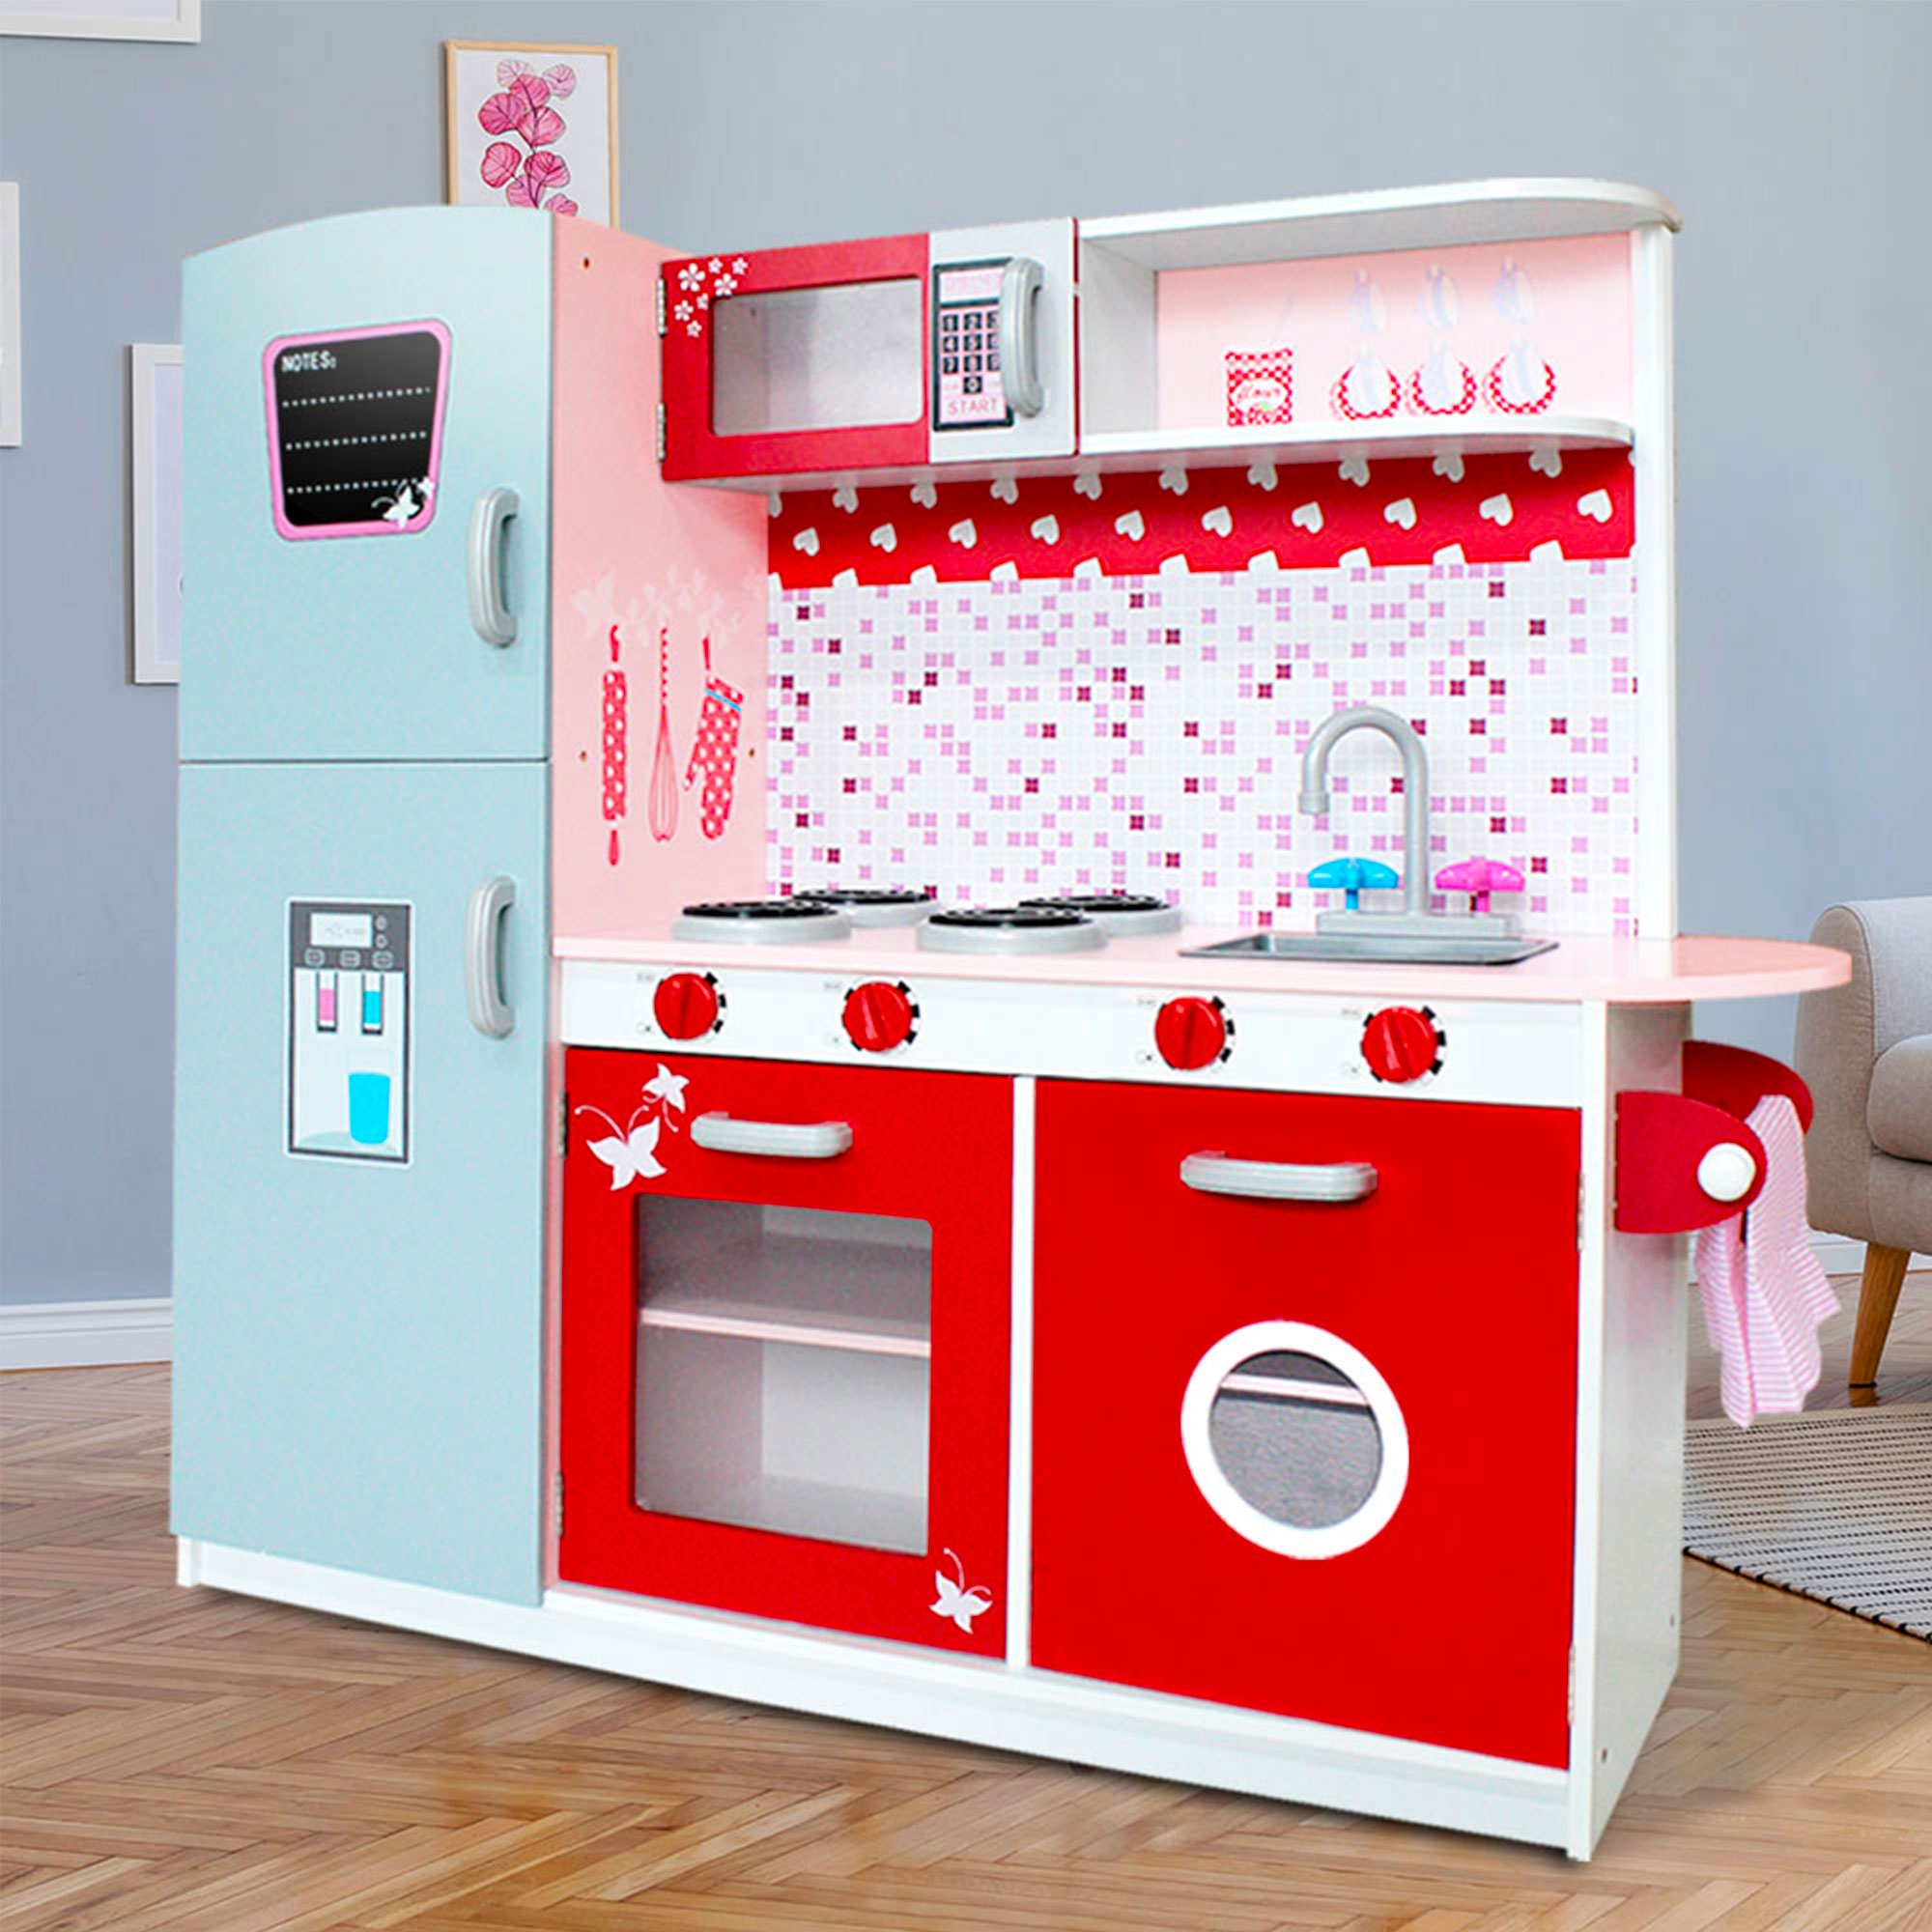 Keezi Kids Pretend Play Kitchen Red/Pink Image 2